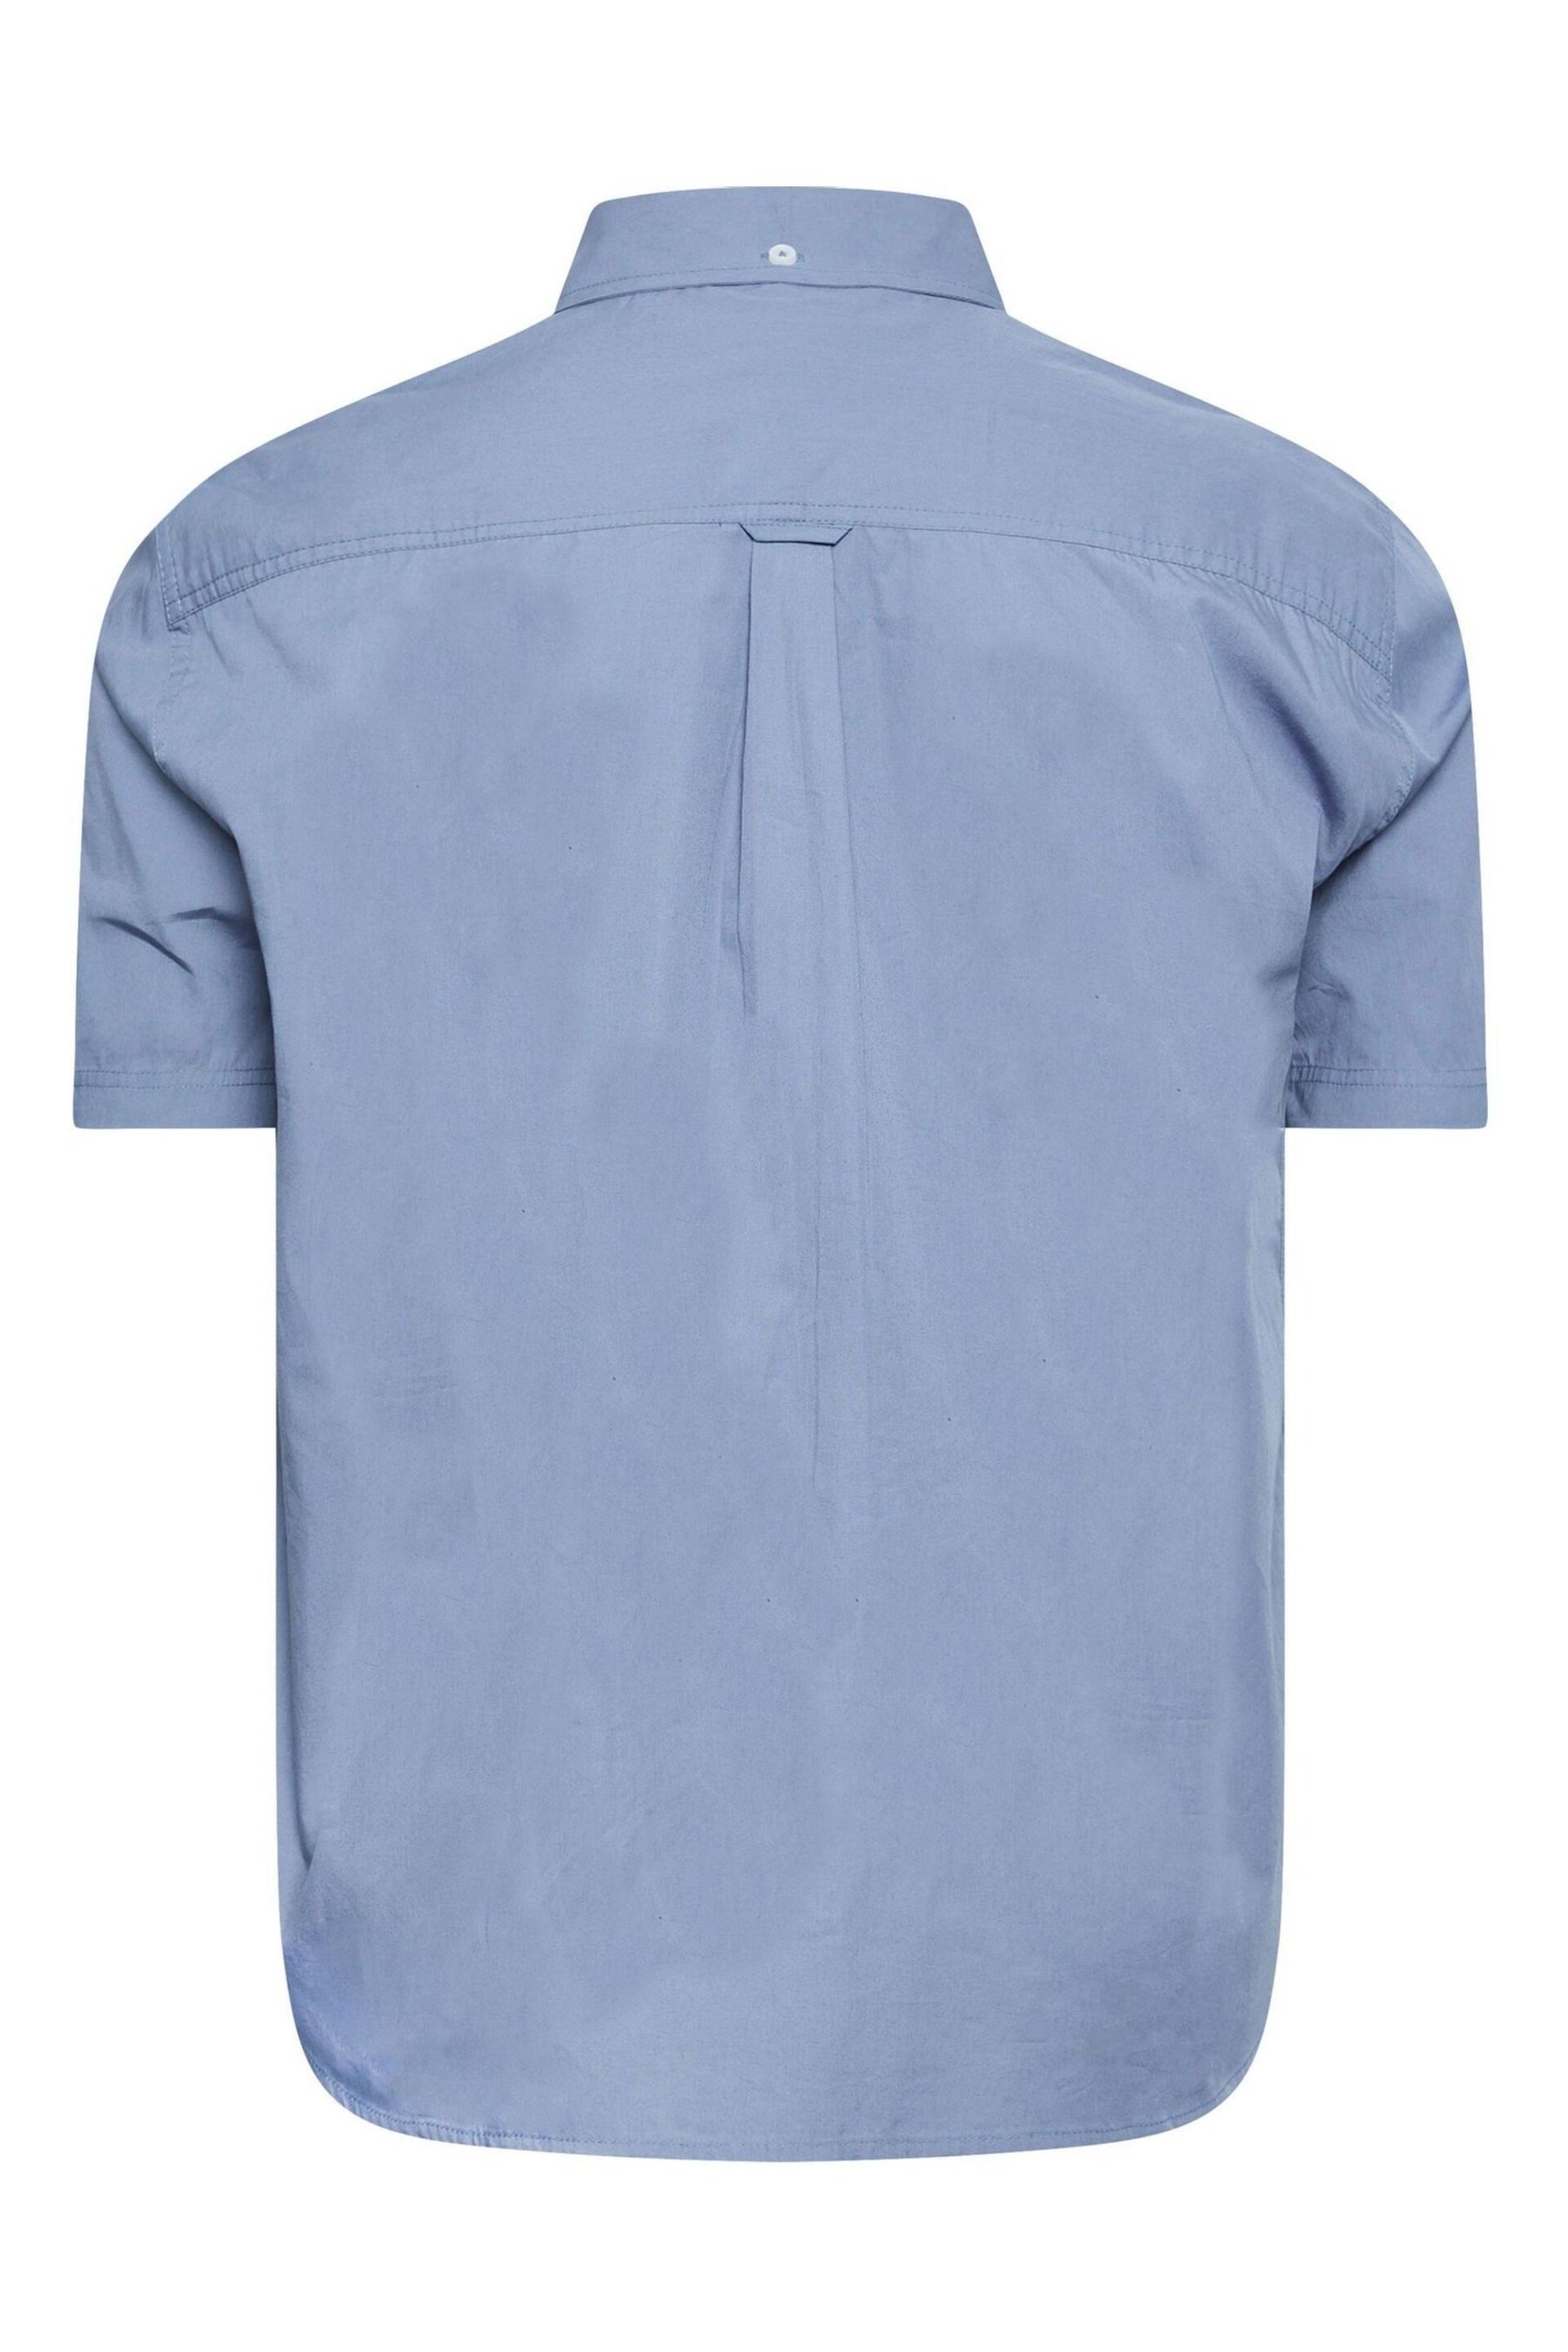 BadRhino Big & Tall Blue Short Sleeve Poplin Shirt - Image 3 of 3